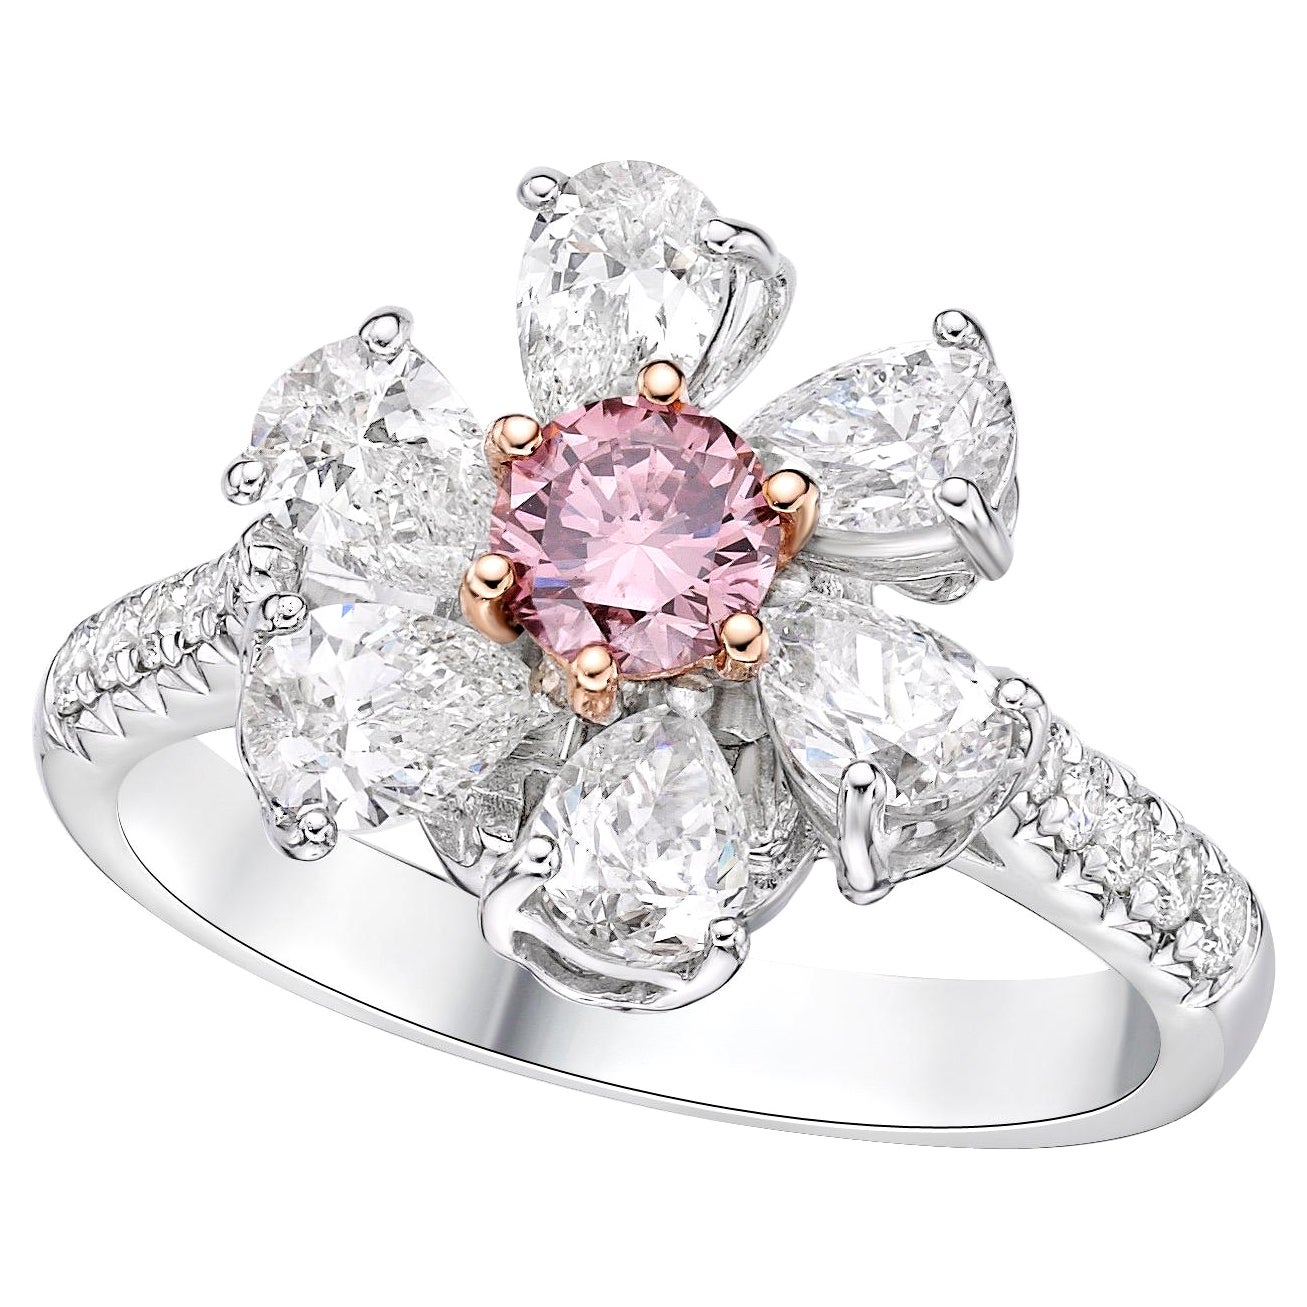 Emilio Jewelry Gia Certified 2.02 Carat Fancy Pink Diamond Ring  For Sale